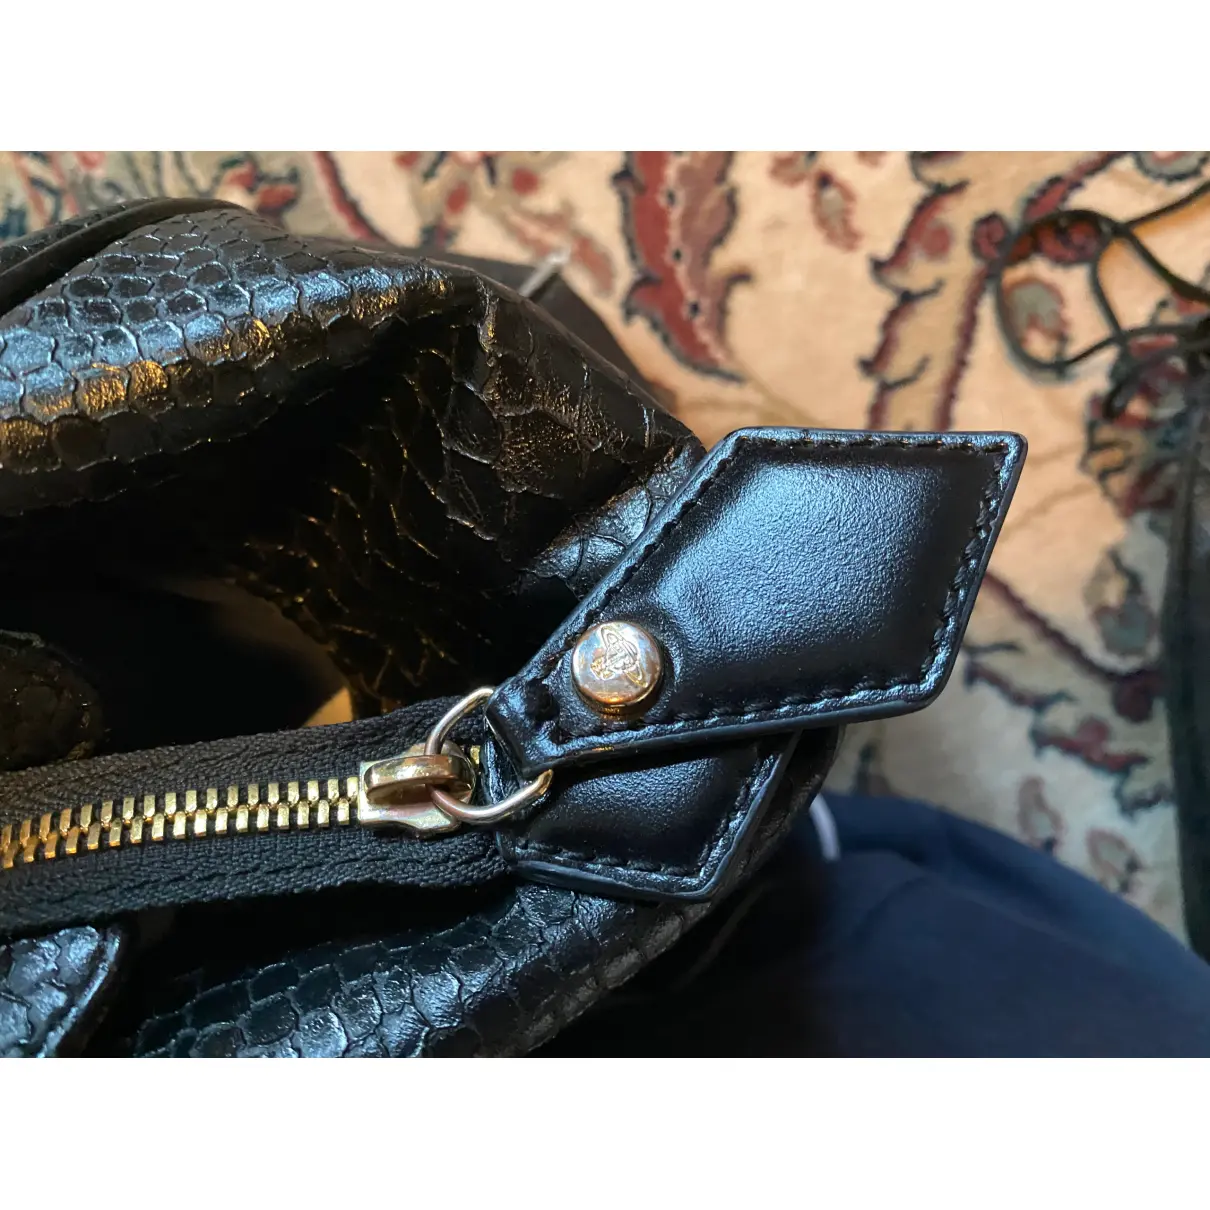 Buy Vivienne Westwood Anglomania Vegan leather handbag online - Vintage